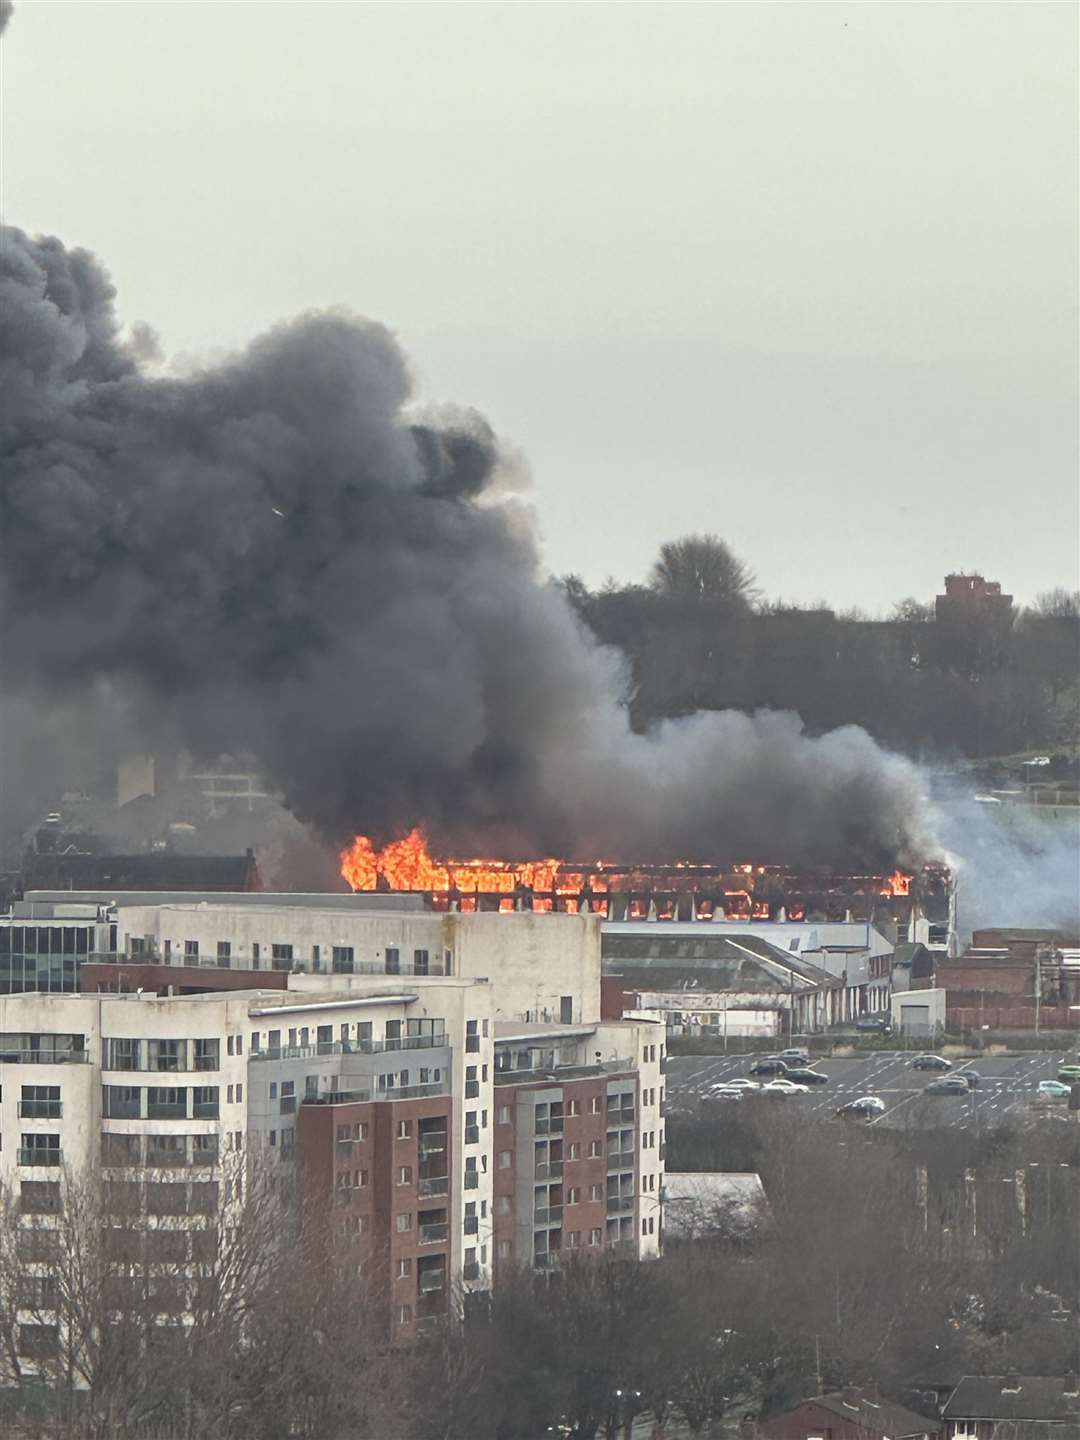 The fire on Fox Street in Liverpool (@misterjgarcia)